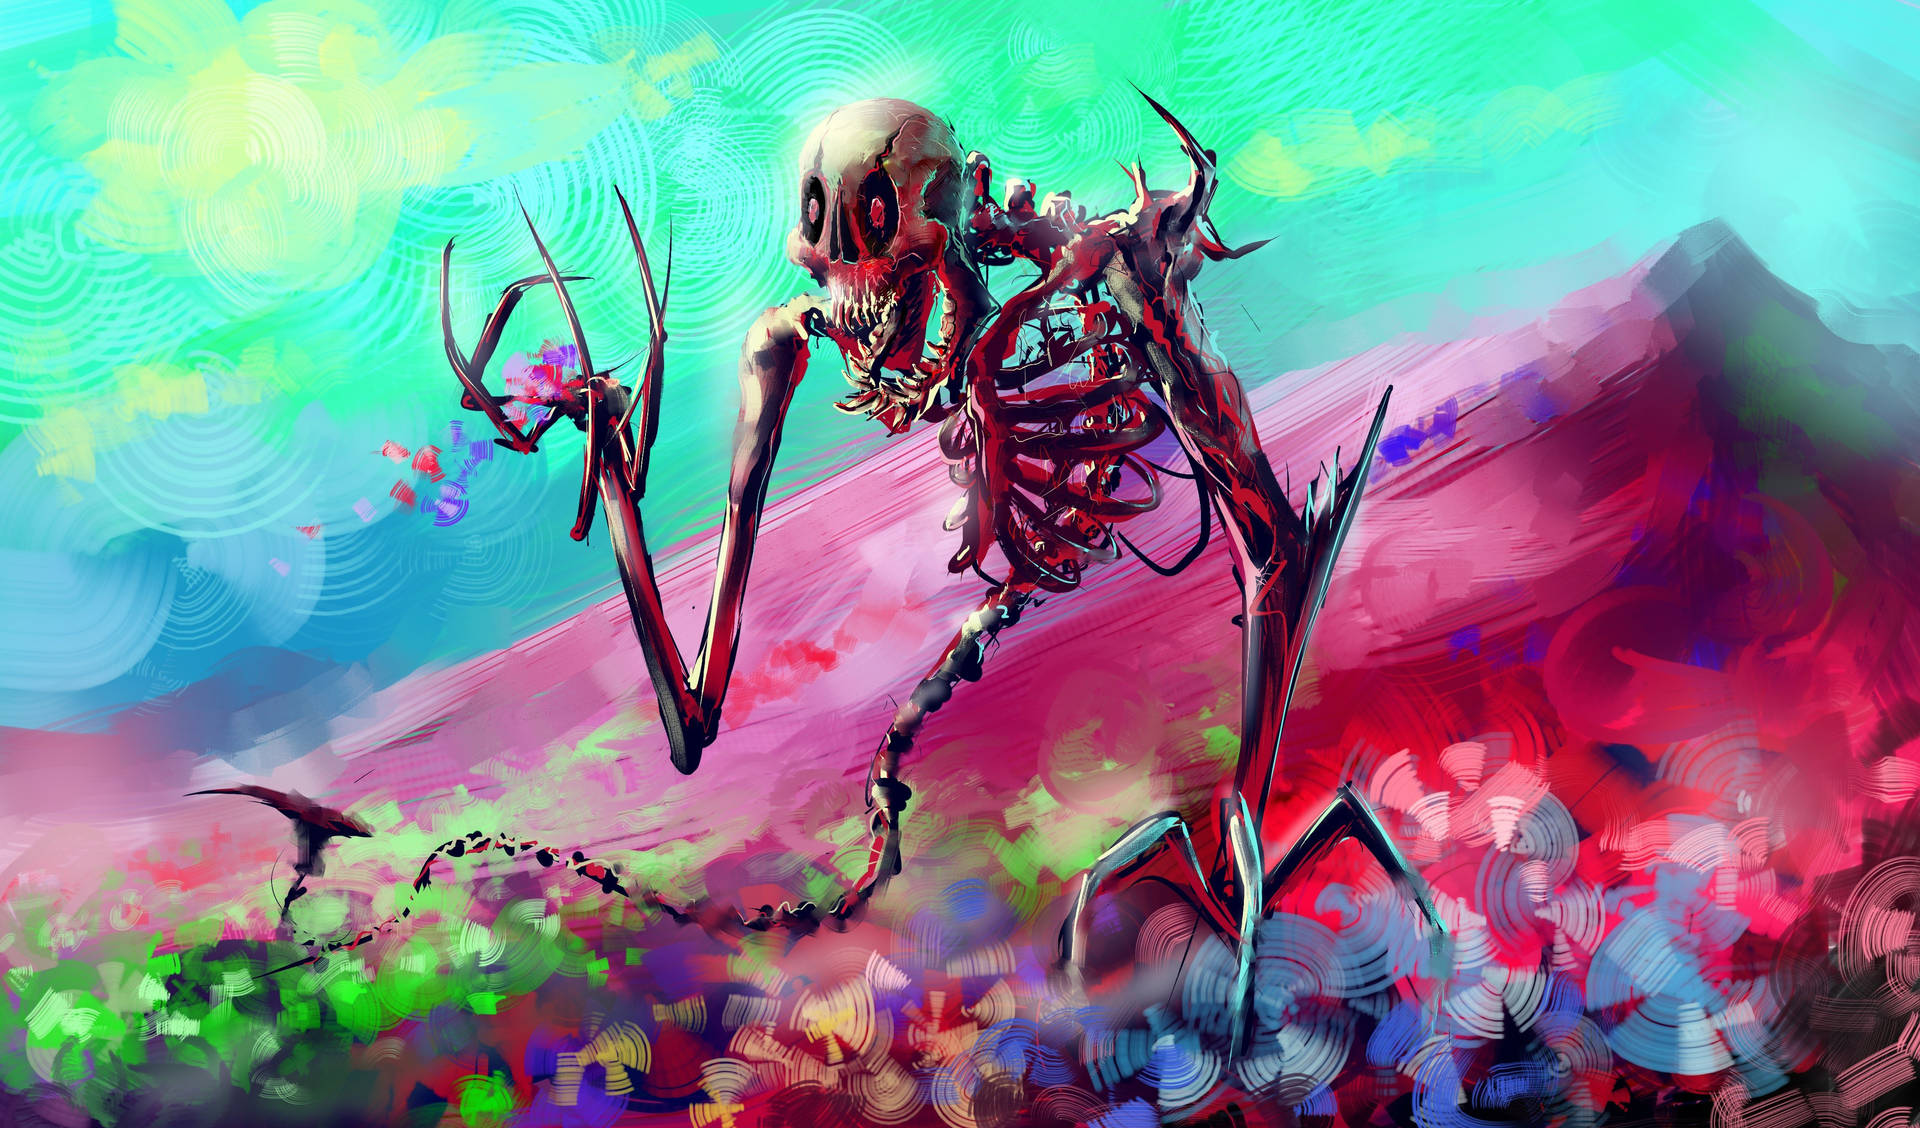 Vortigern Skeleton Painting